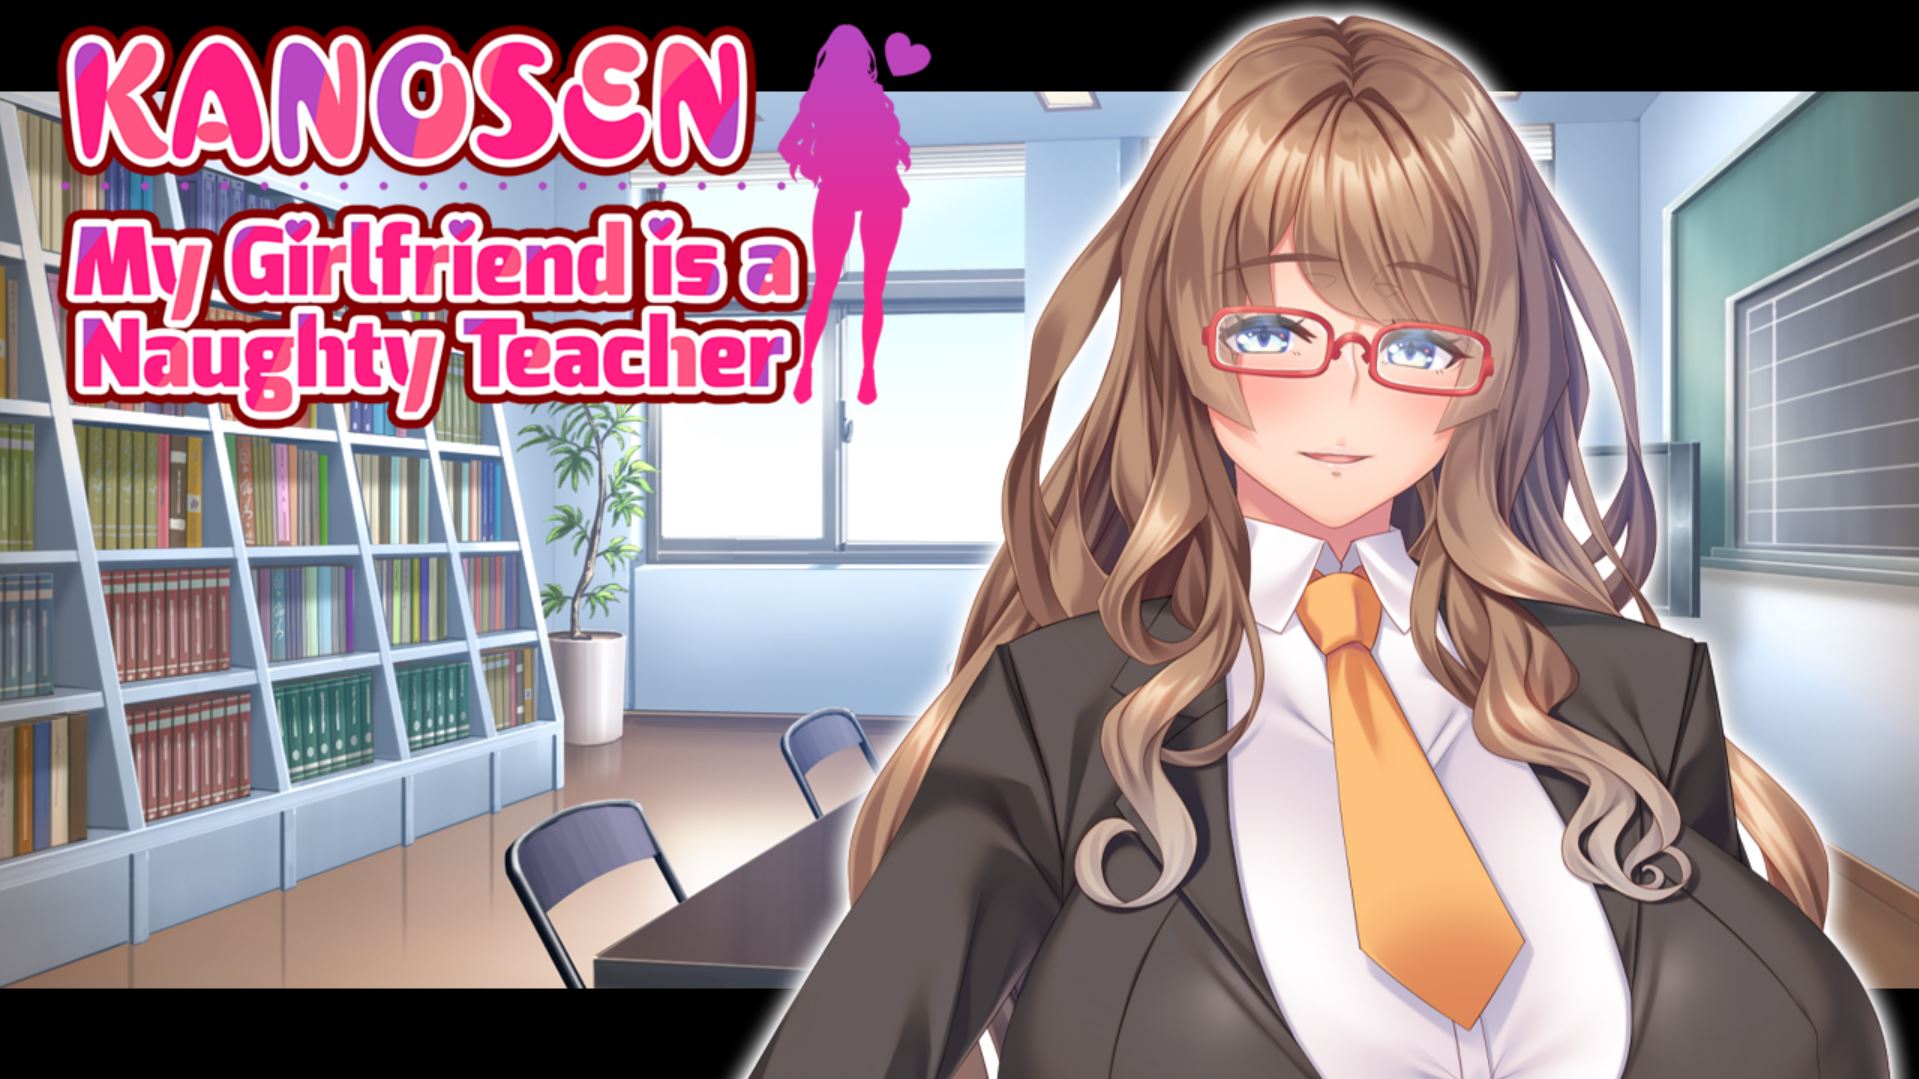 KANOSEN My Girlfriend is a Naughty Teacher porn xxx game download cover